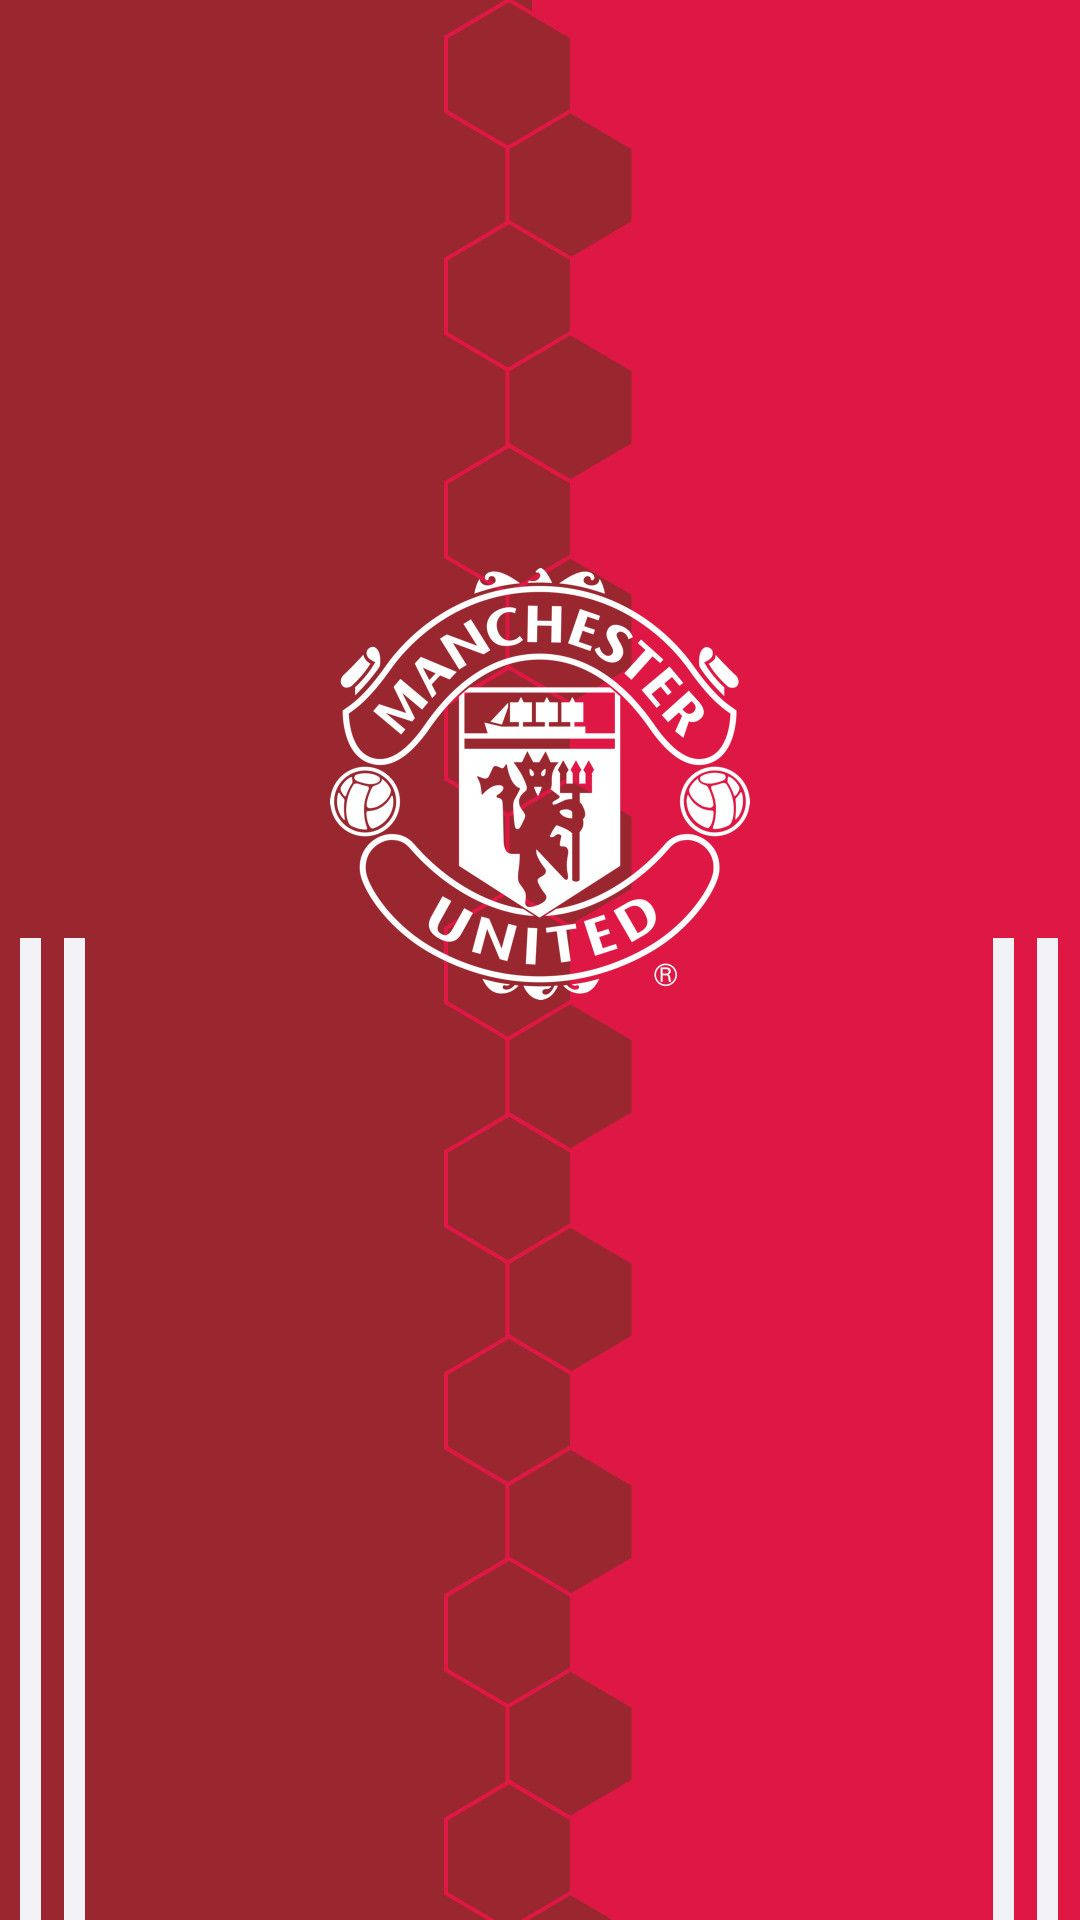 Manchester United Digital Poster Wallpaper